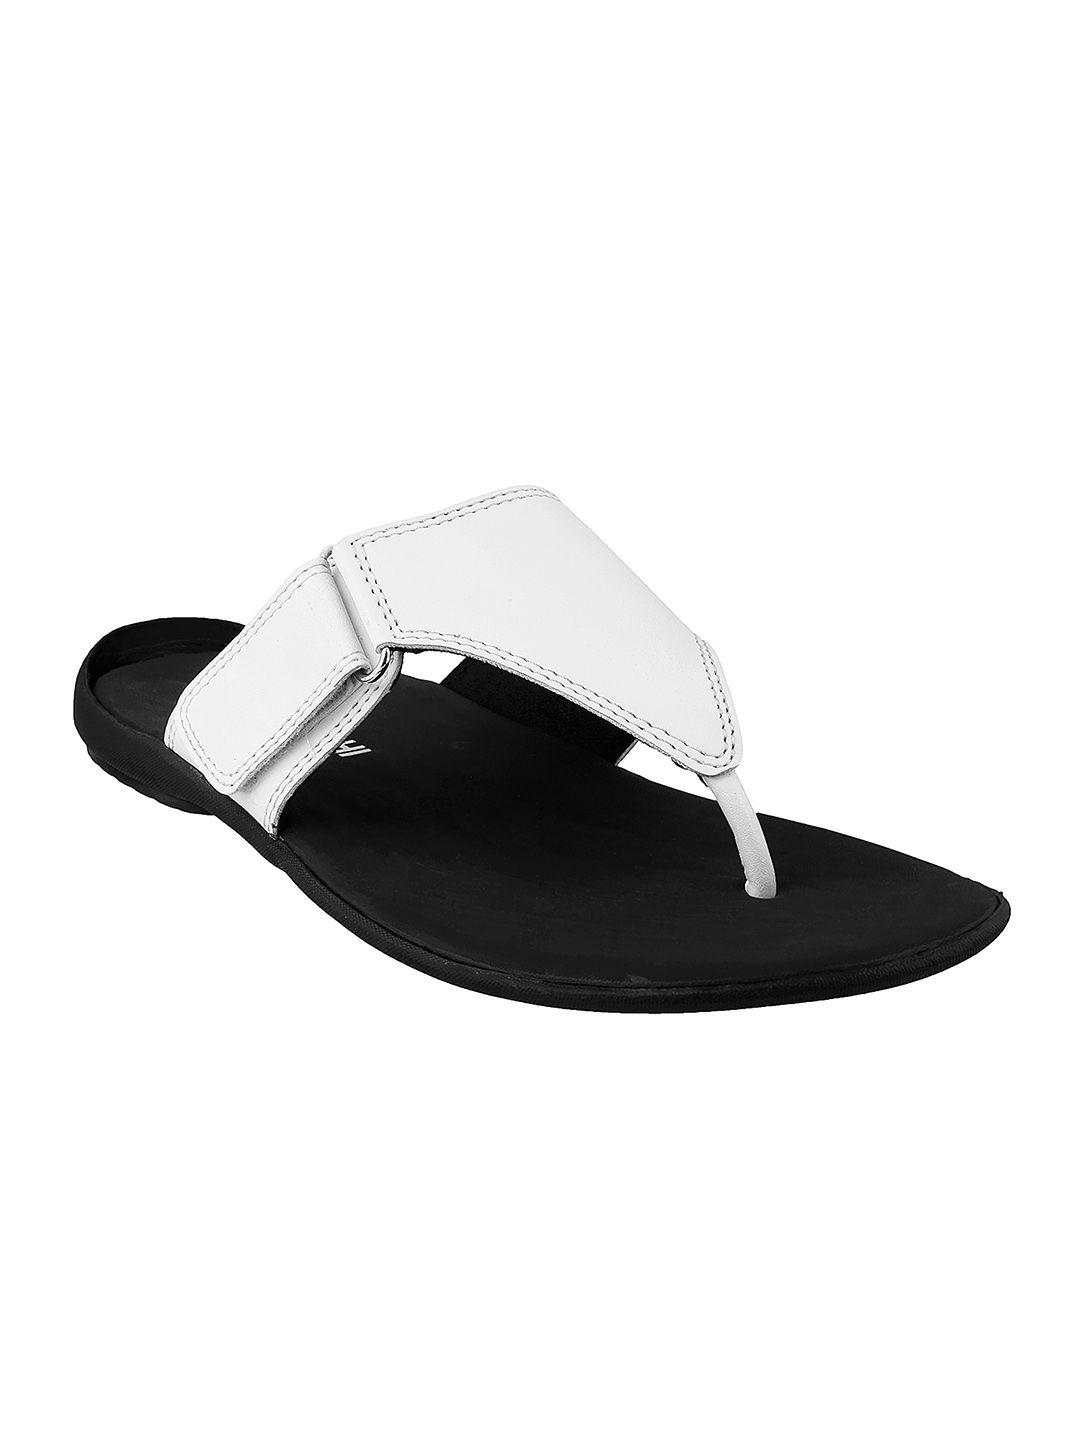 mochi men white leather sandals